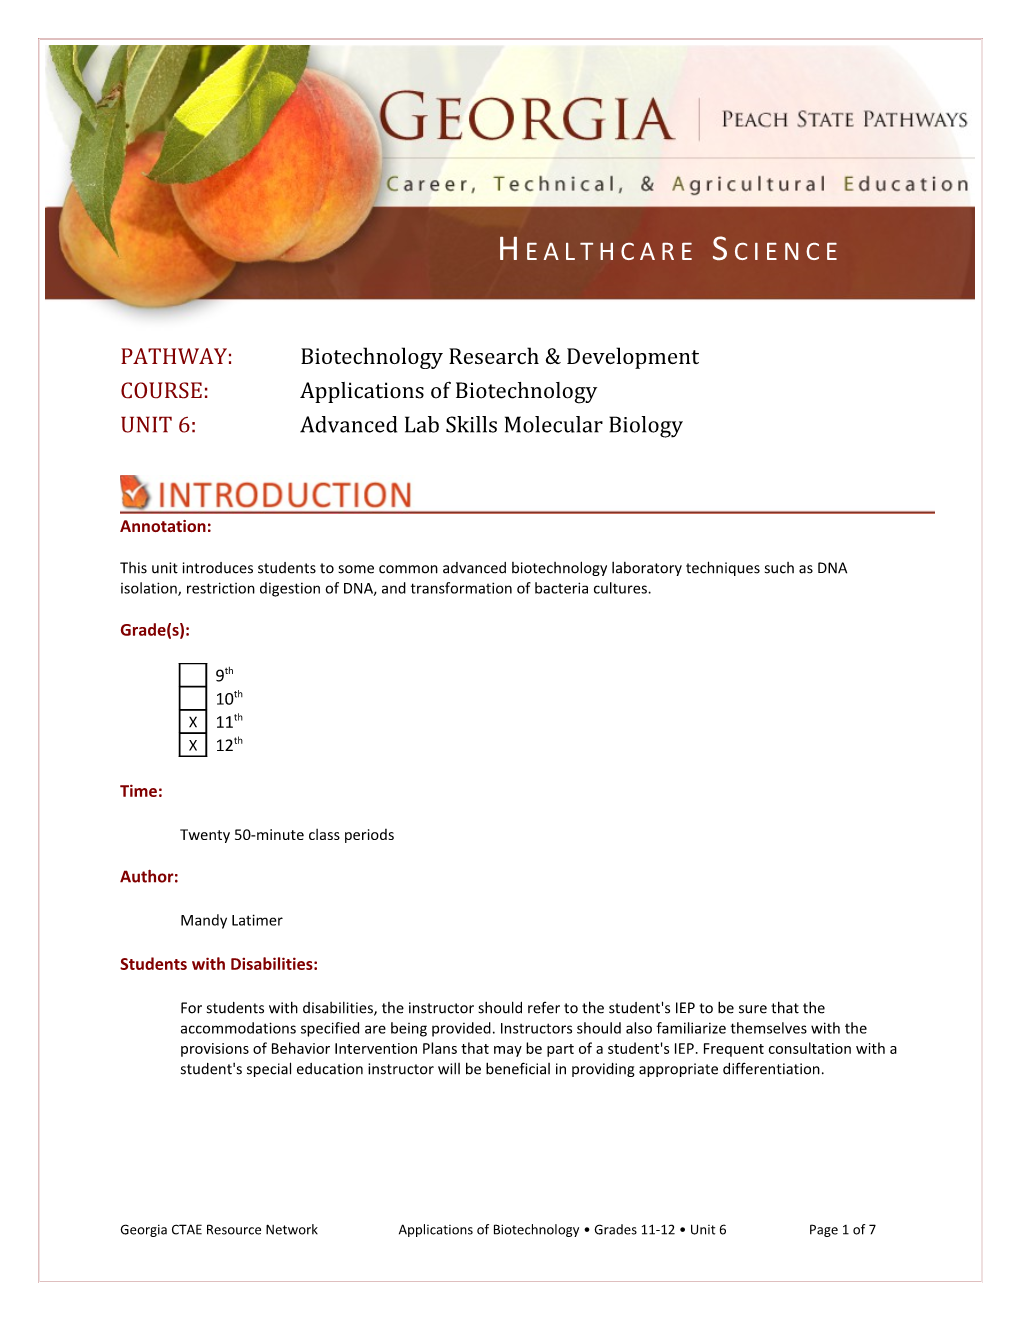 PATHWAY: Biotechnology Research & Development s1